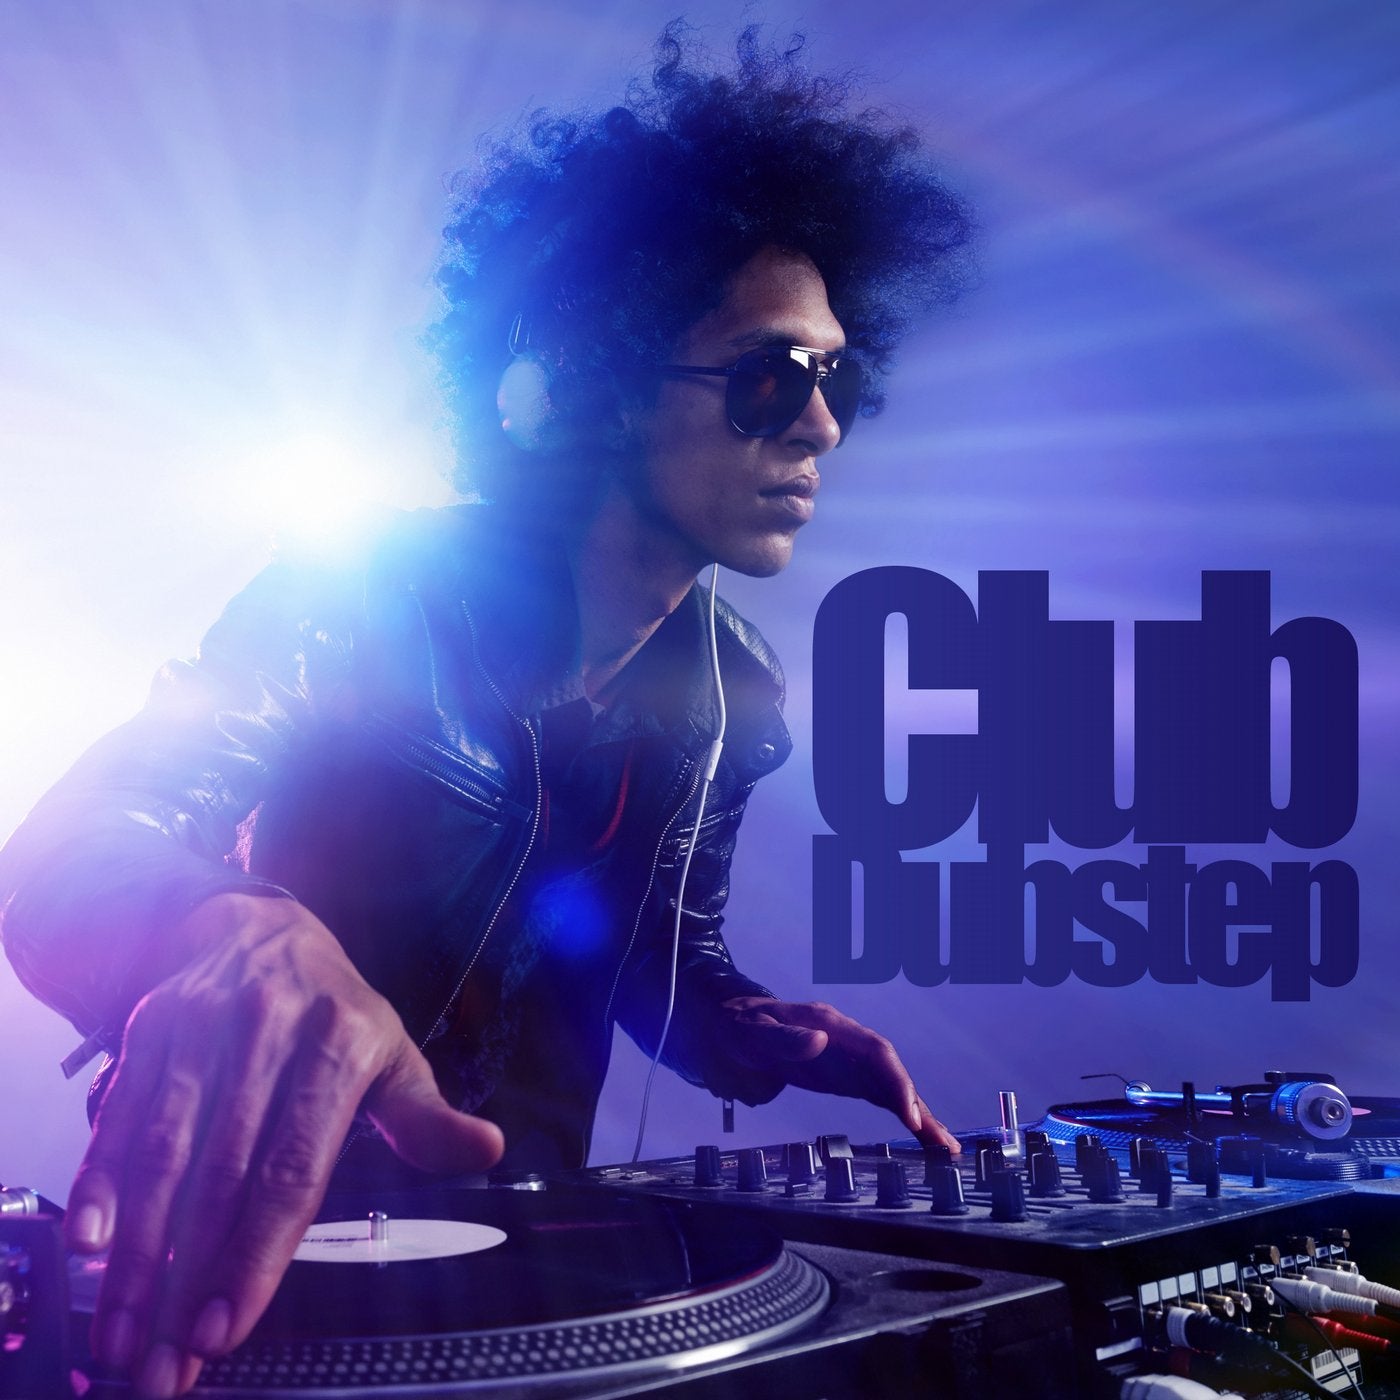 Club Dubstep